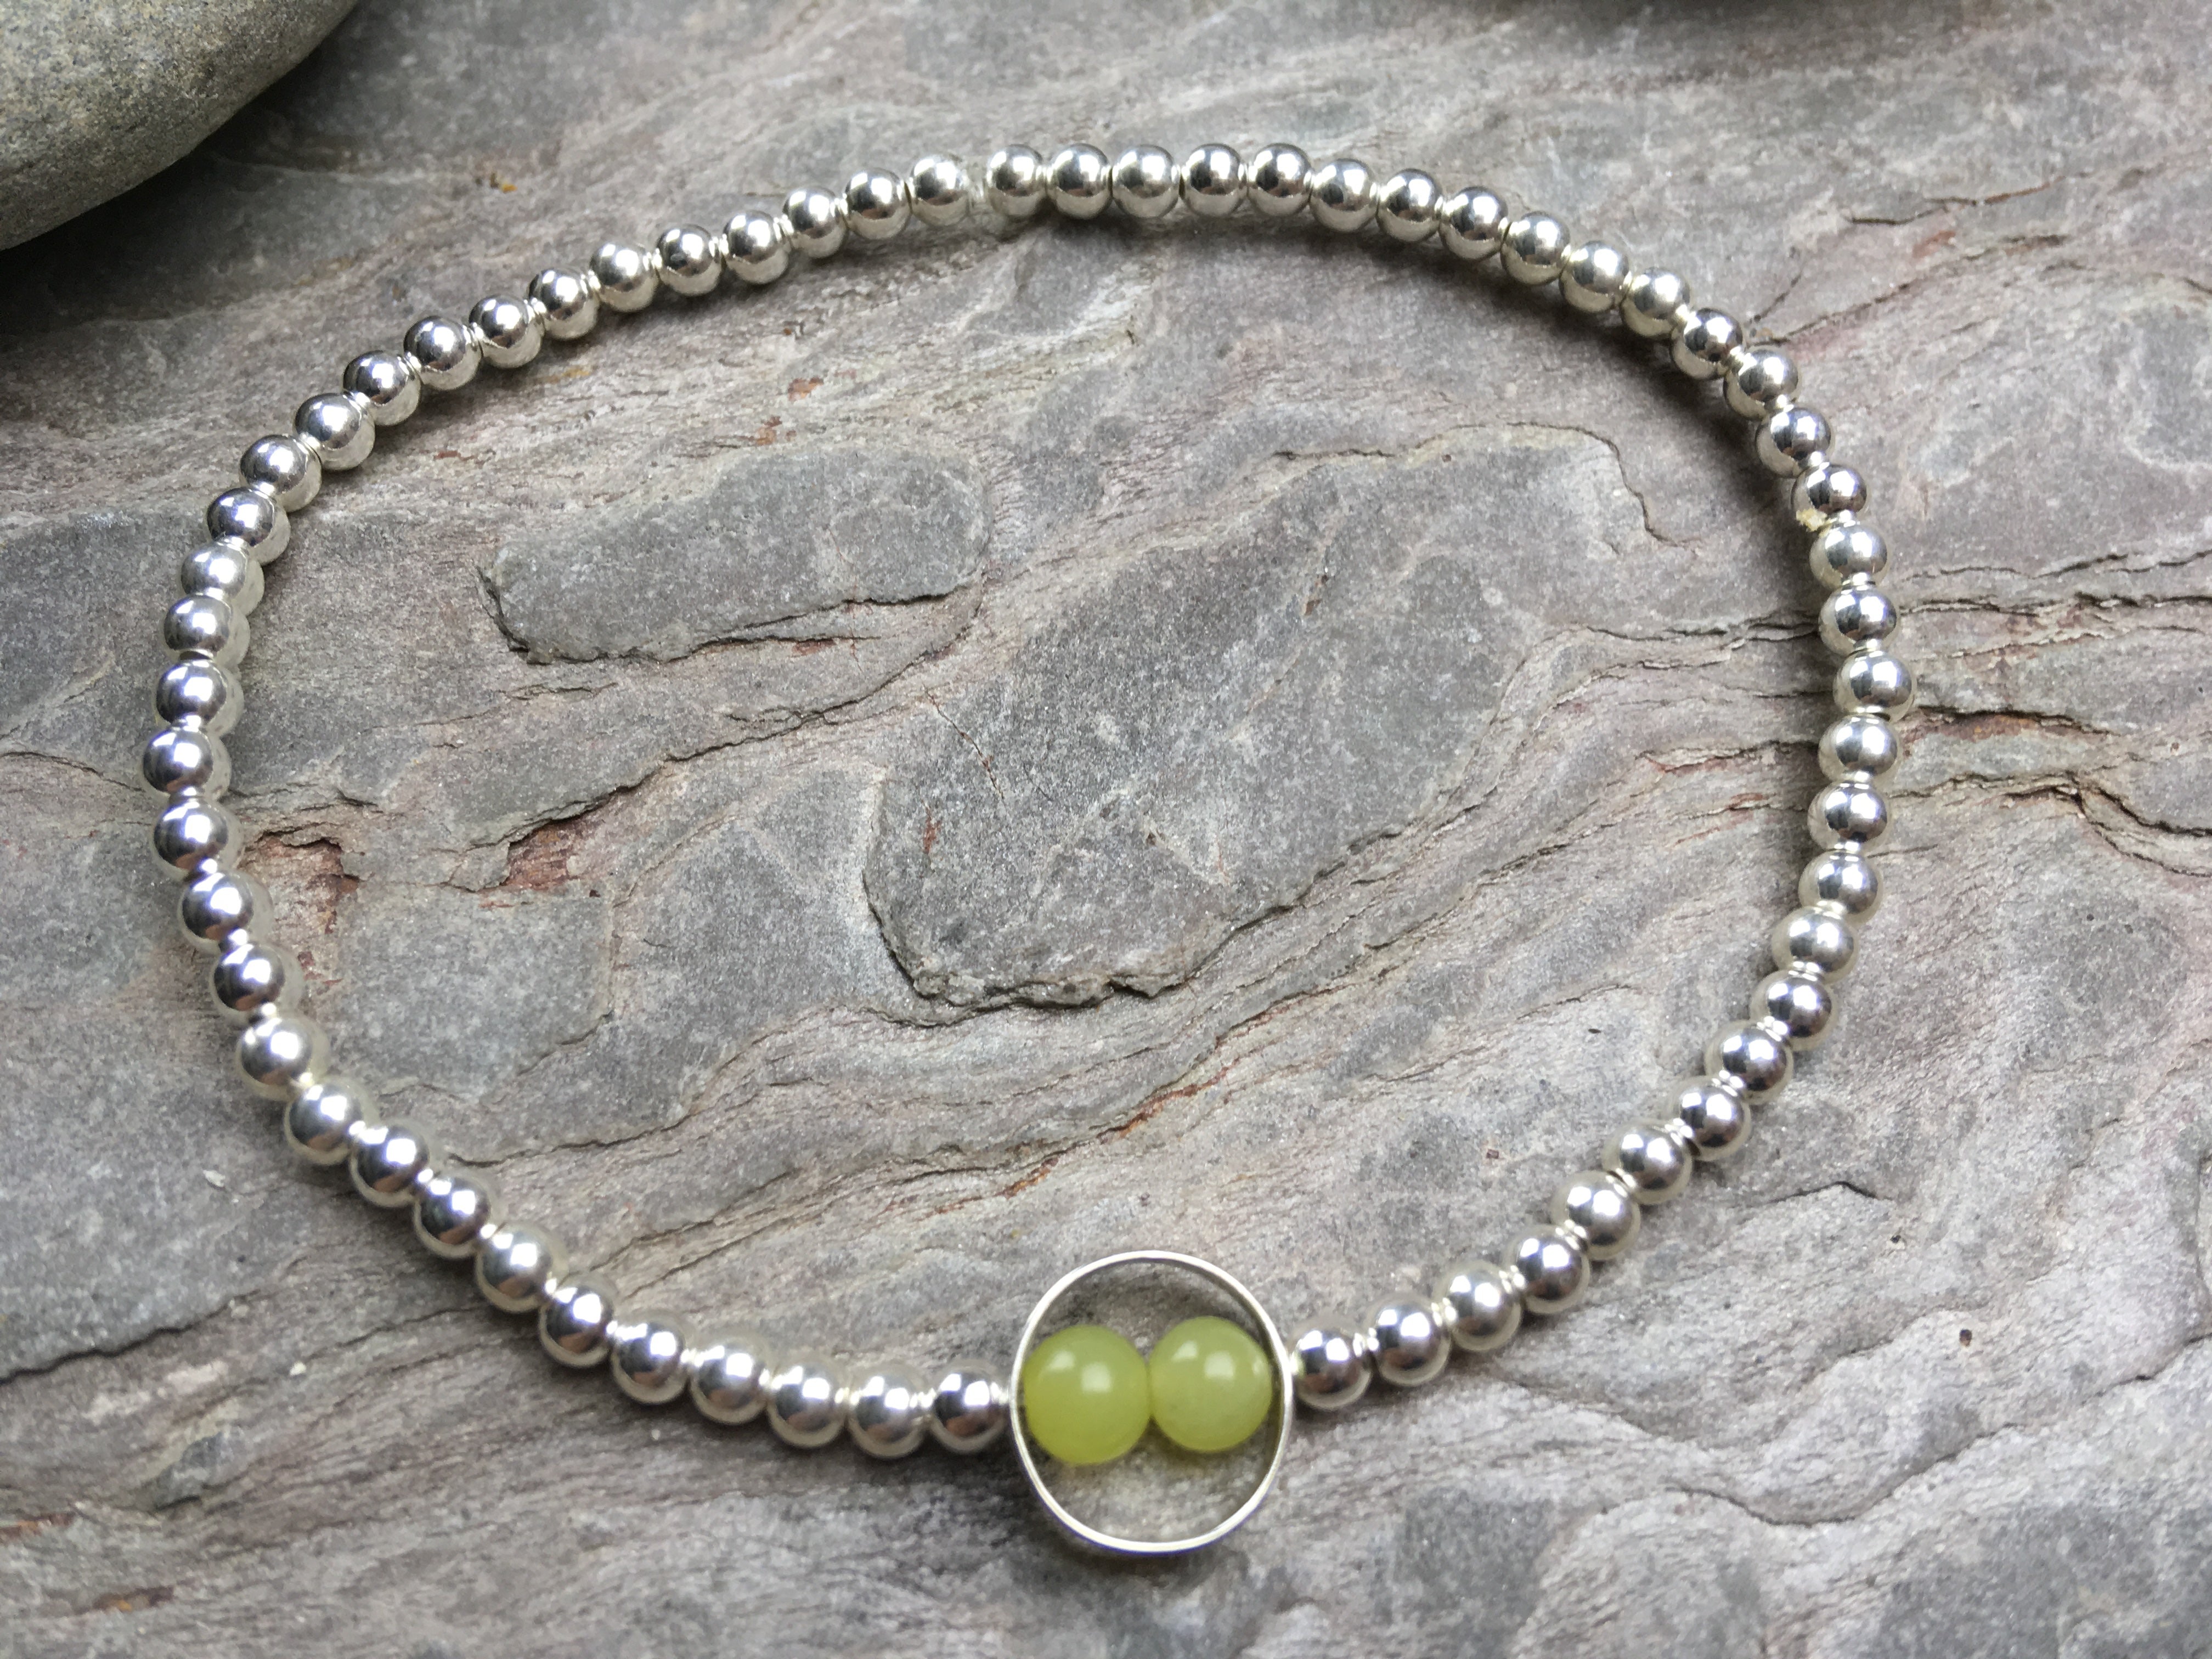 Silver beaded bracelet with double citrine stones.